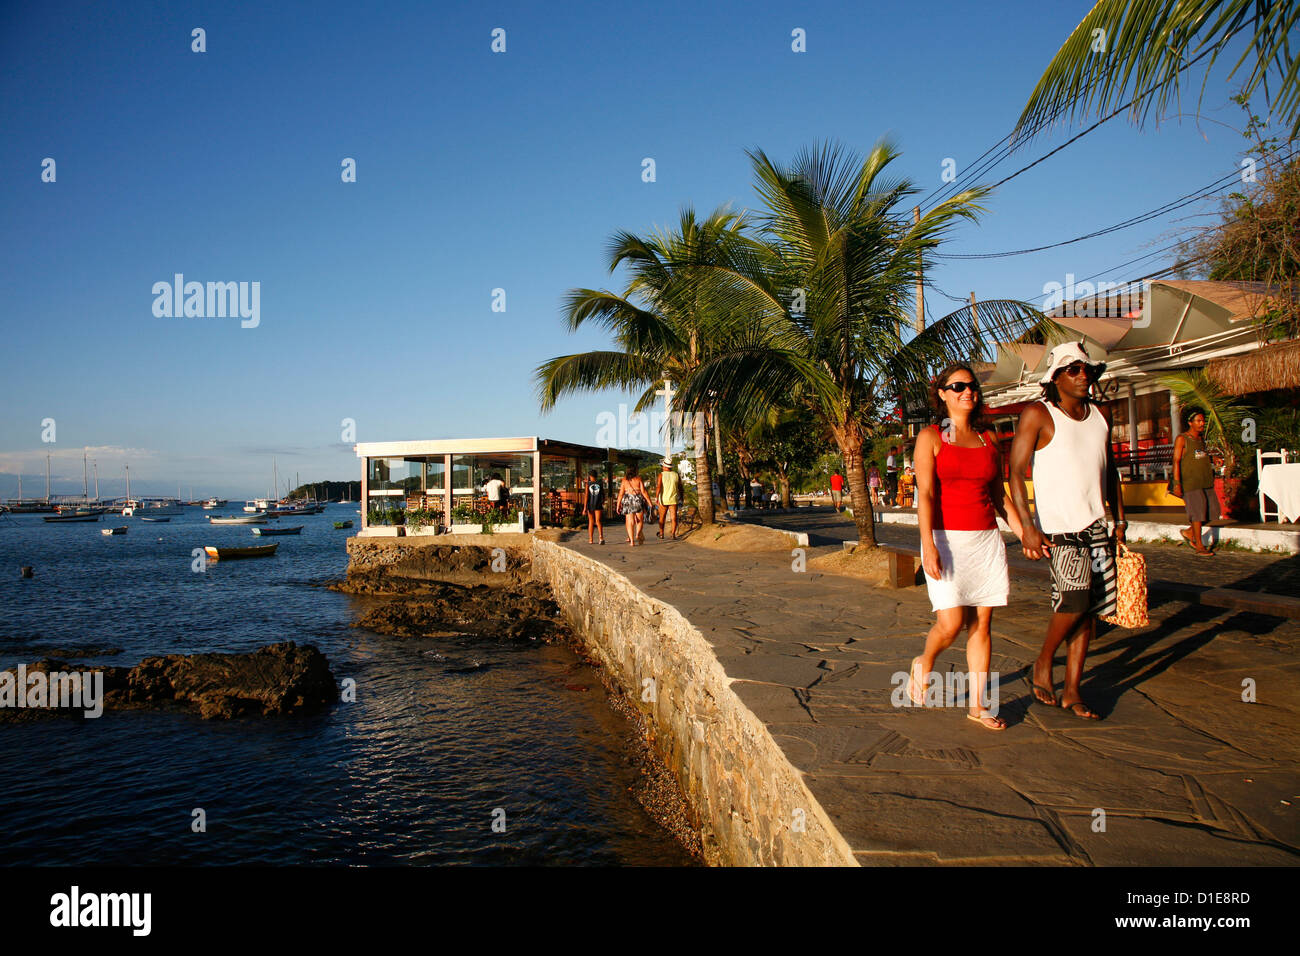 People walking on Orla Bardot promenade, Buzios, Rio de Janeiro State, Brazil, South America Stock Photo